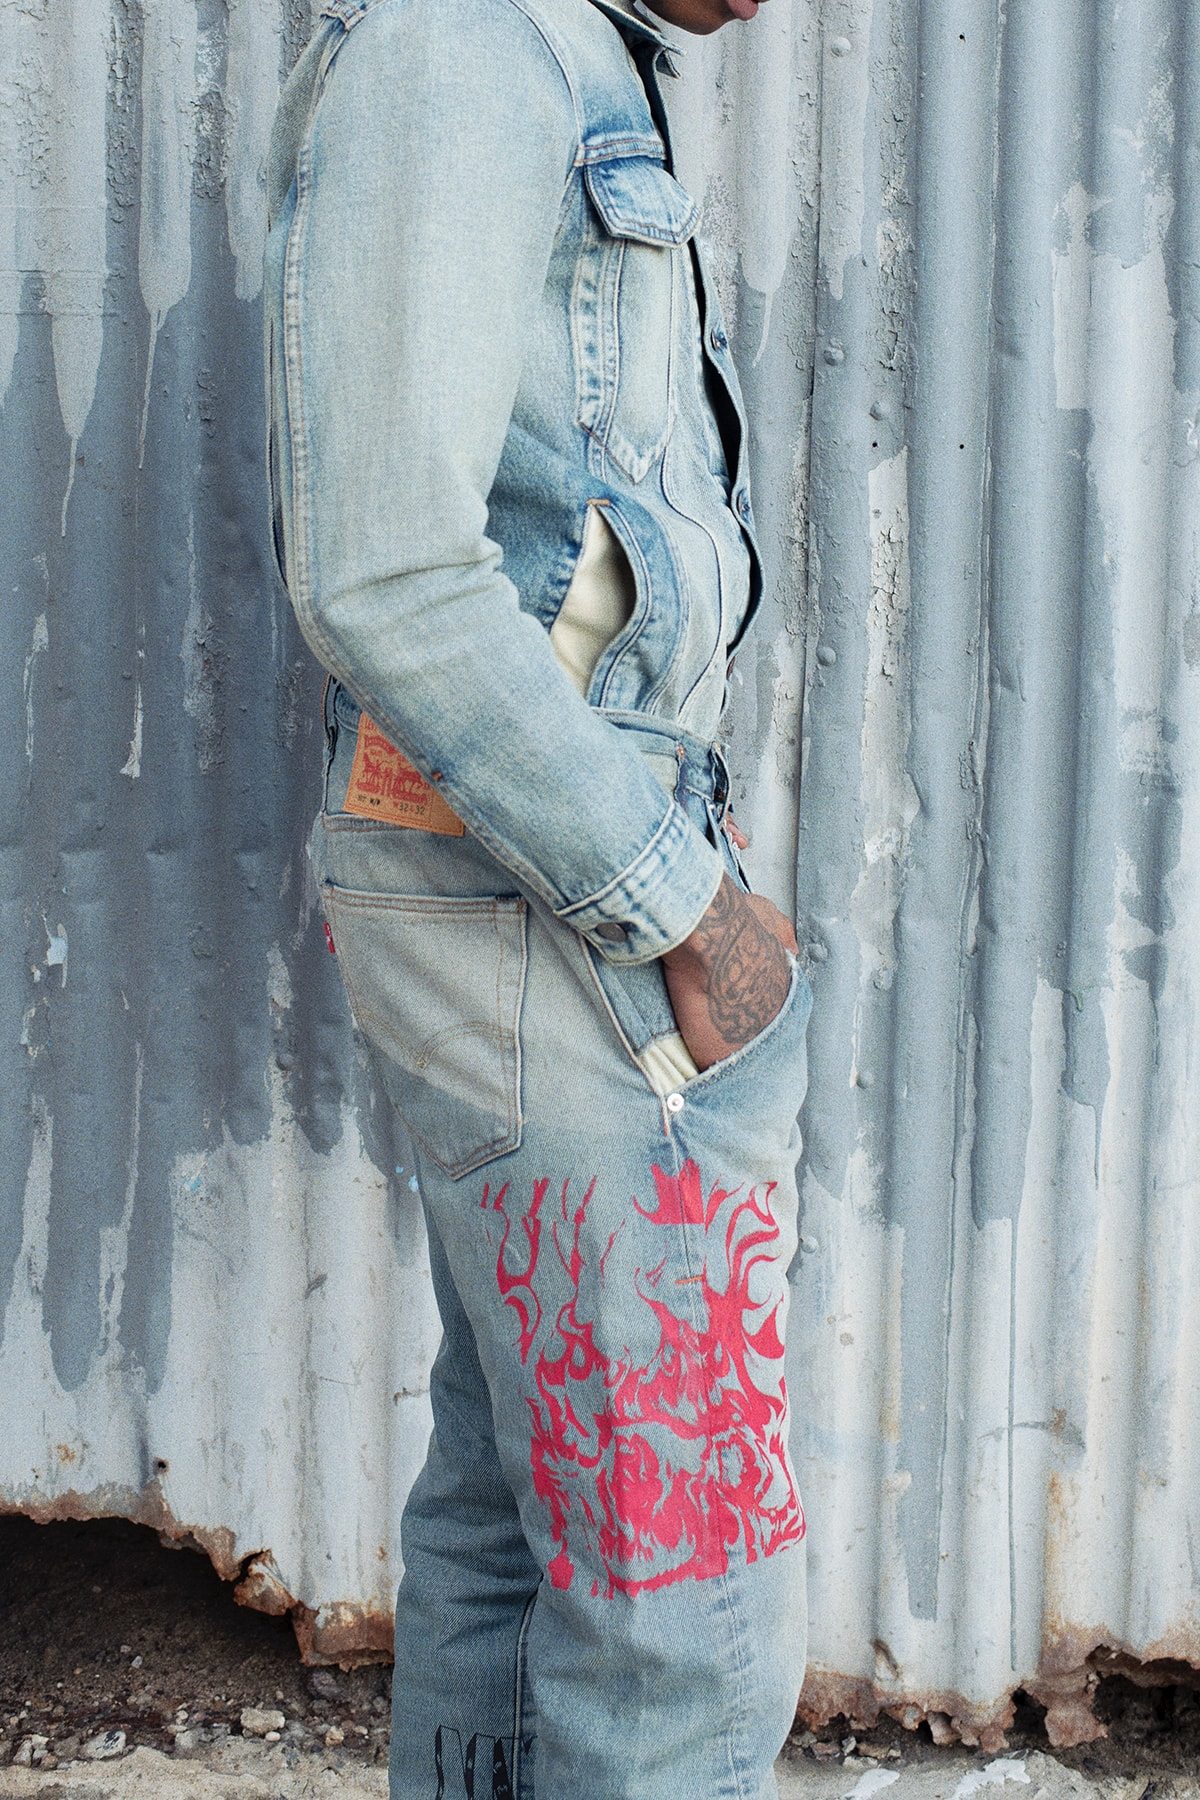 Heron Preston x Levi's Collaboration Collection Trucker Jacket 501 Jeans Pink Denim